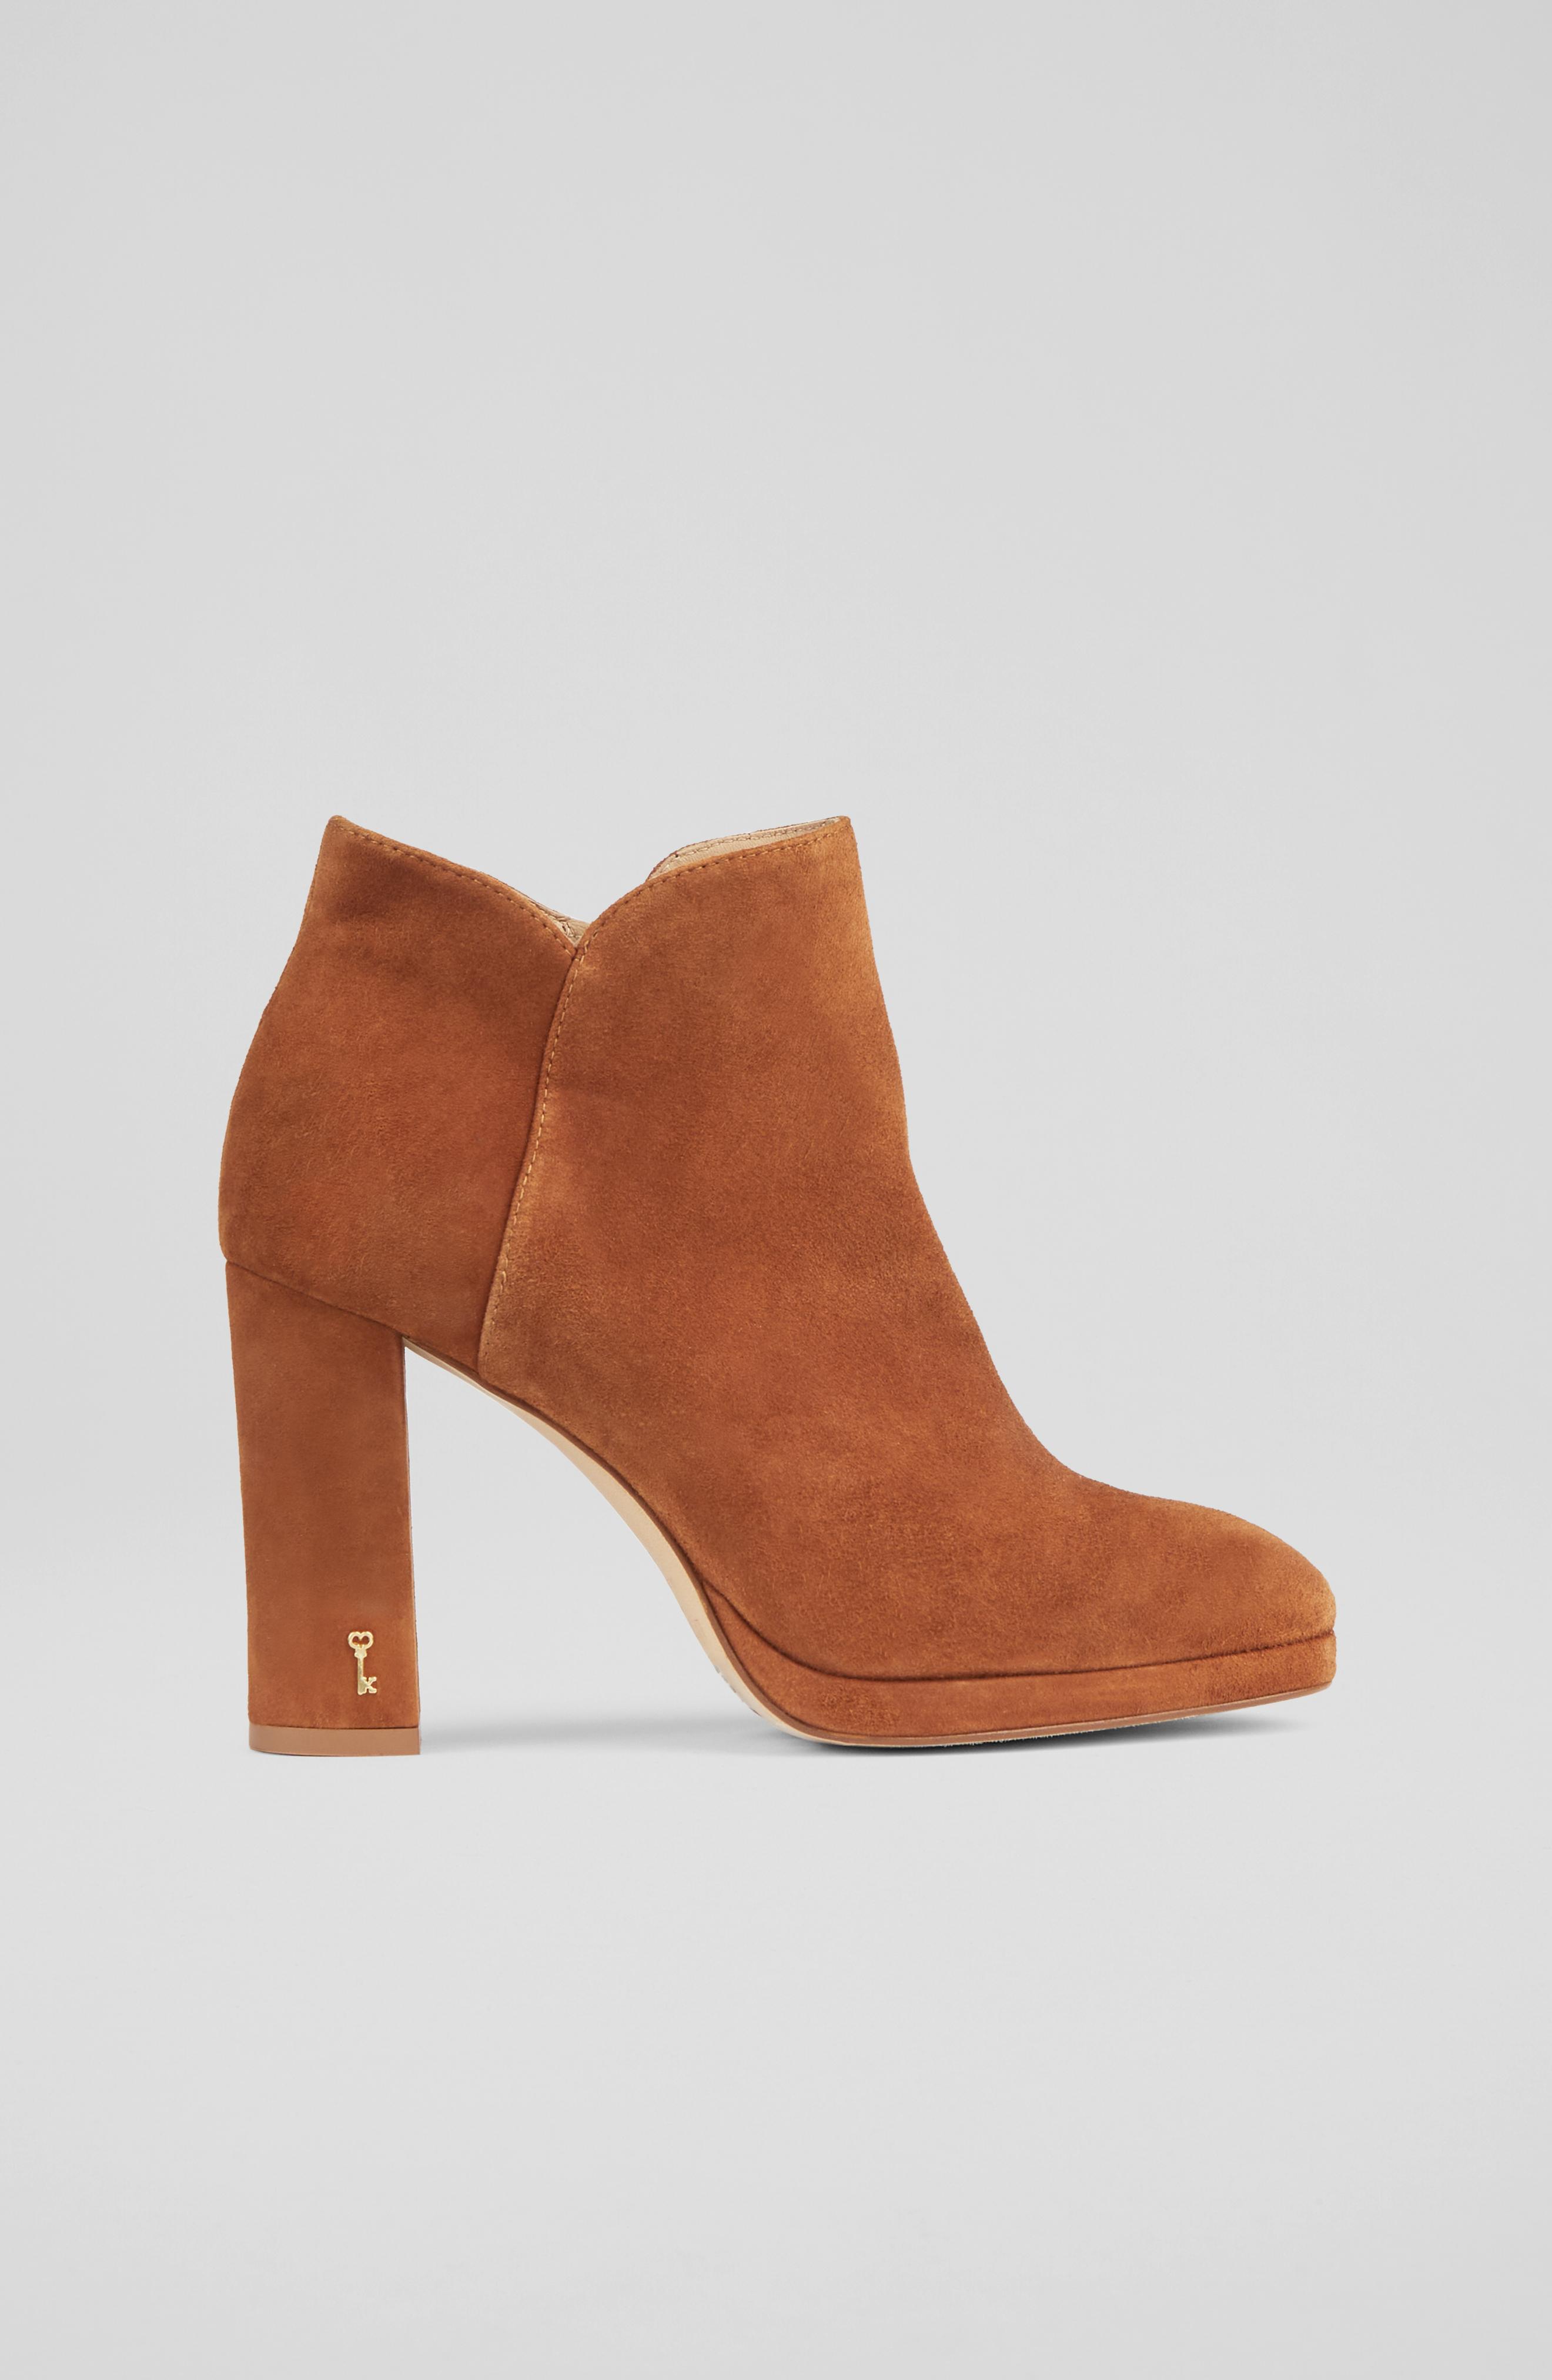 Next FOREVER COMFORT SOCK - High heeled ankle boots - tan brown/brown -  Zalando.de